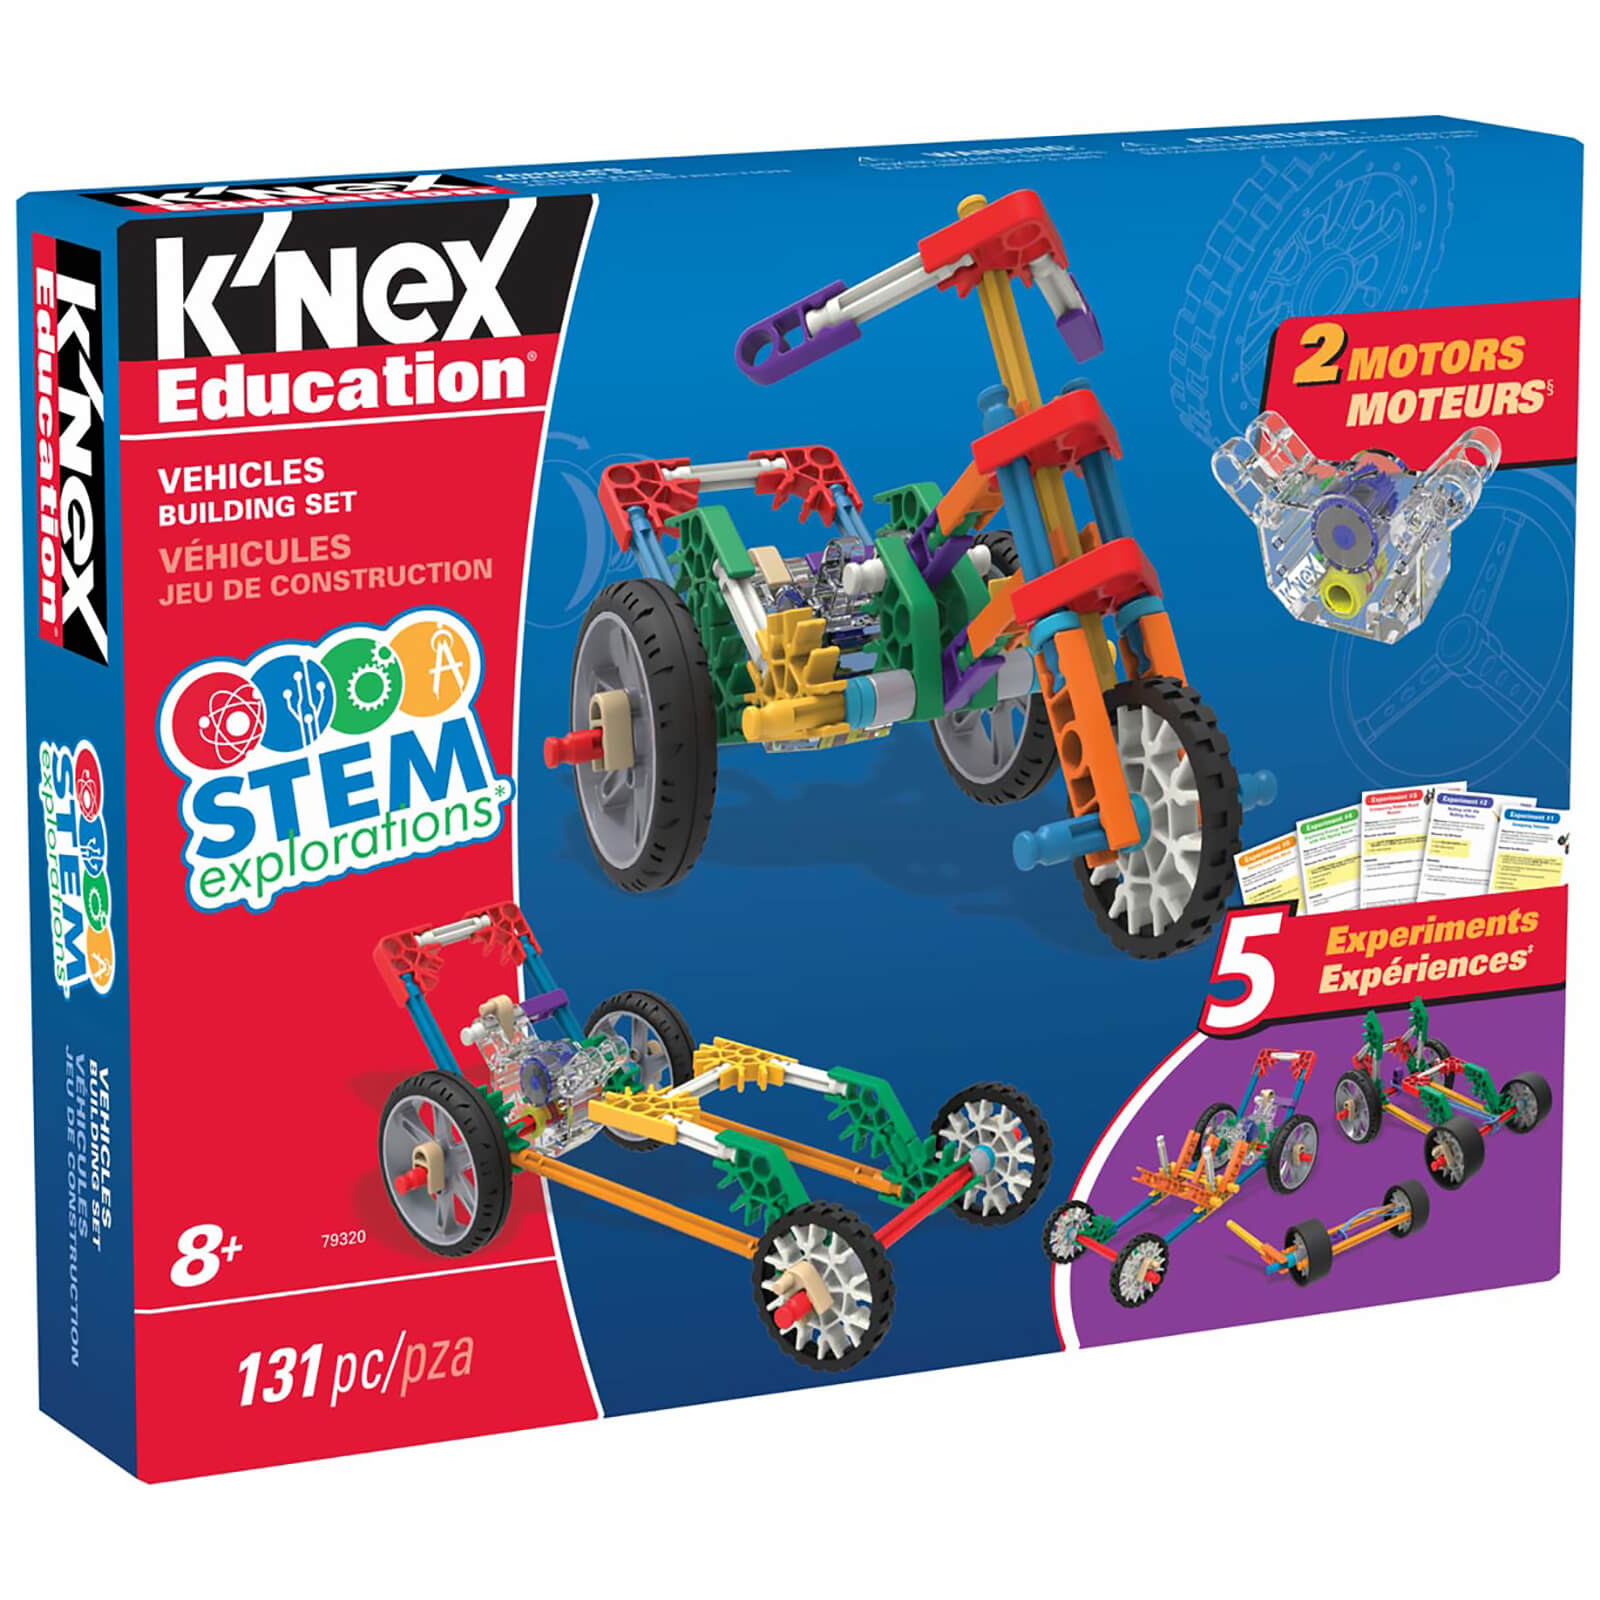 K'NEX Education STEM Explorations Vehicles (79320)